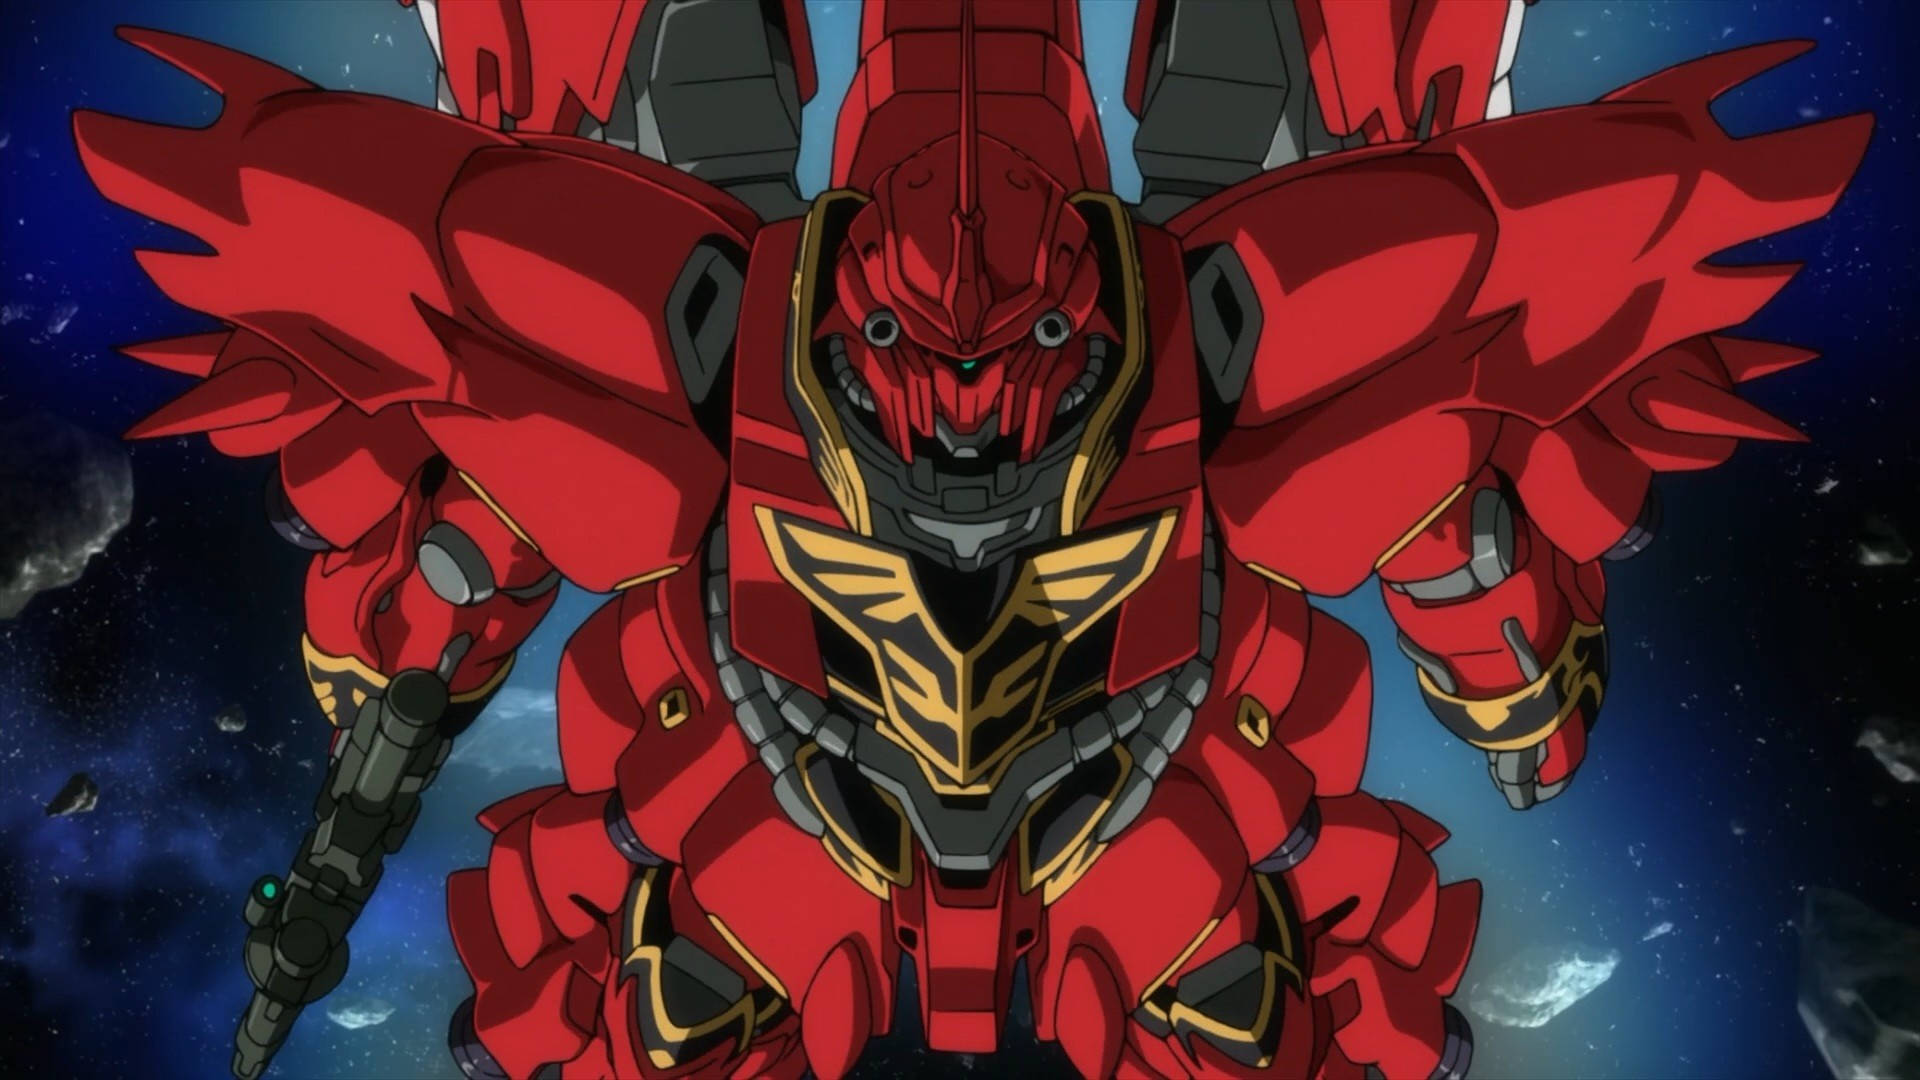 Rotermobile-anzug Gundam Im Weltraum Wallpaper